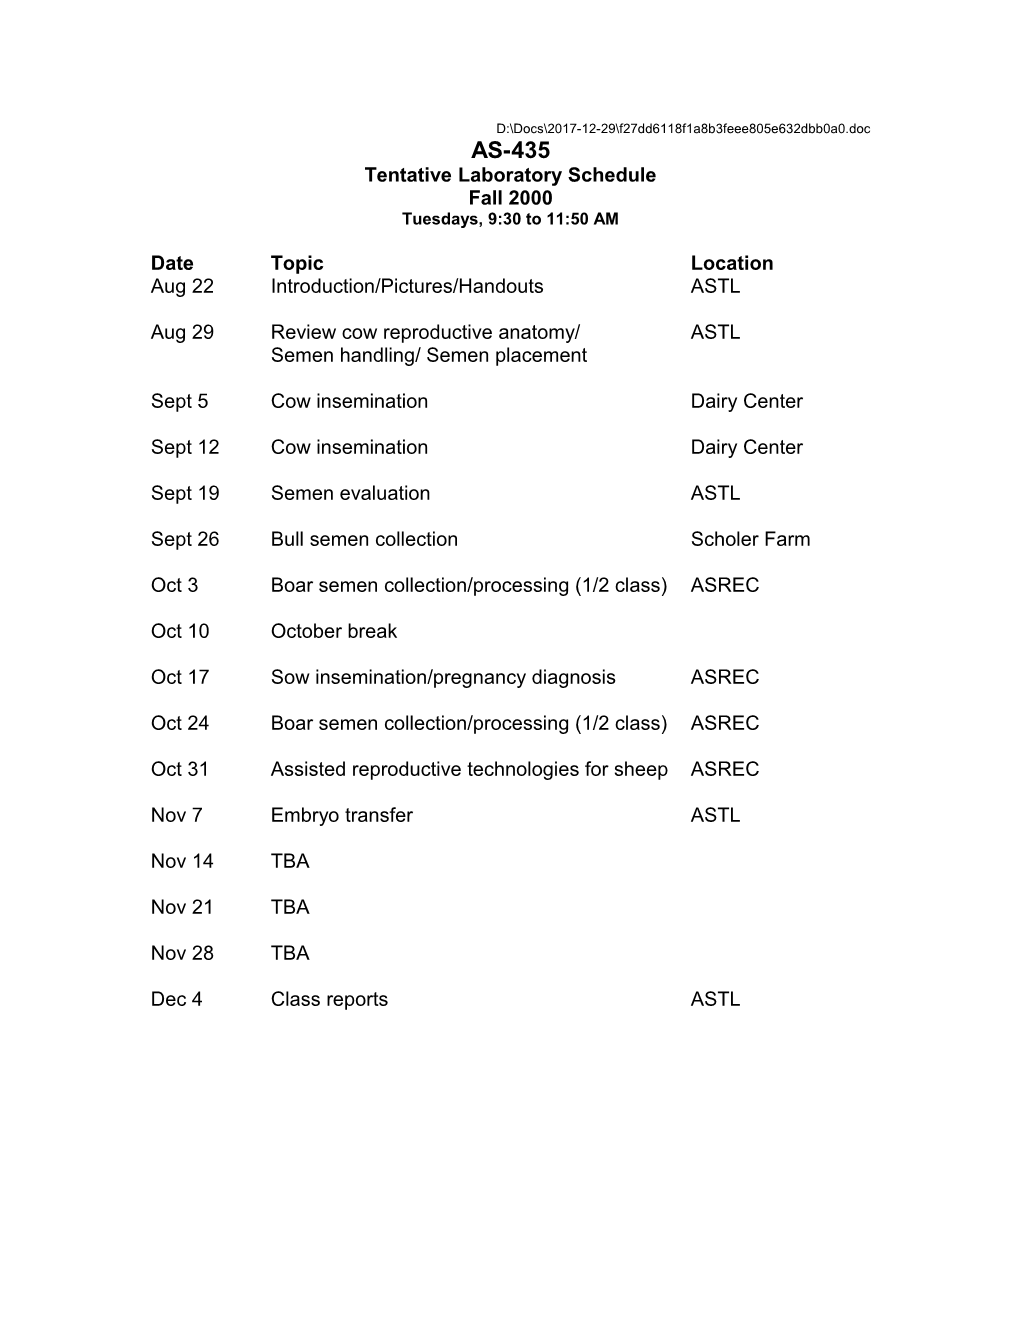 Tentative Laboratory Schedule